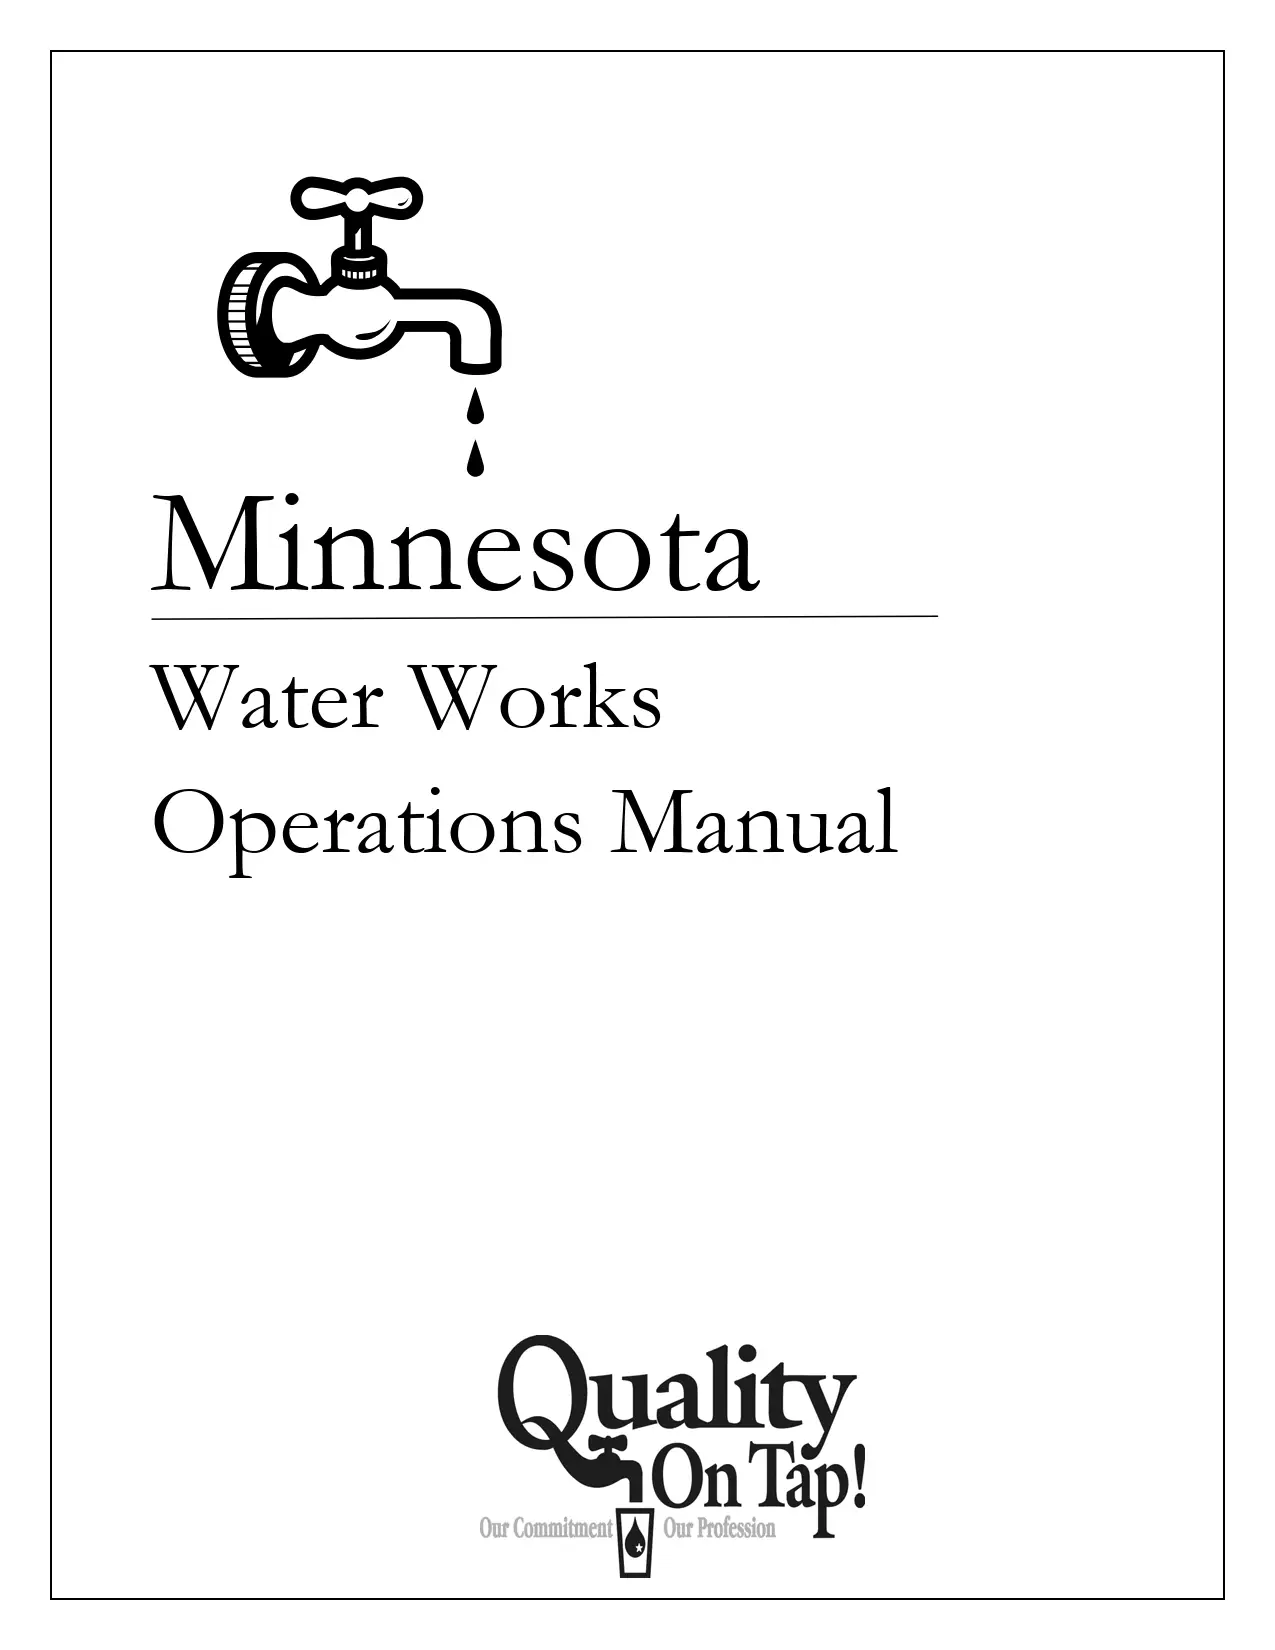 Minnesota Water Works Operations Manual